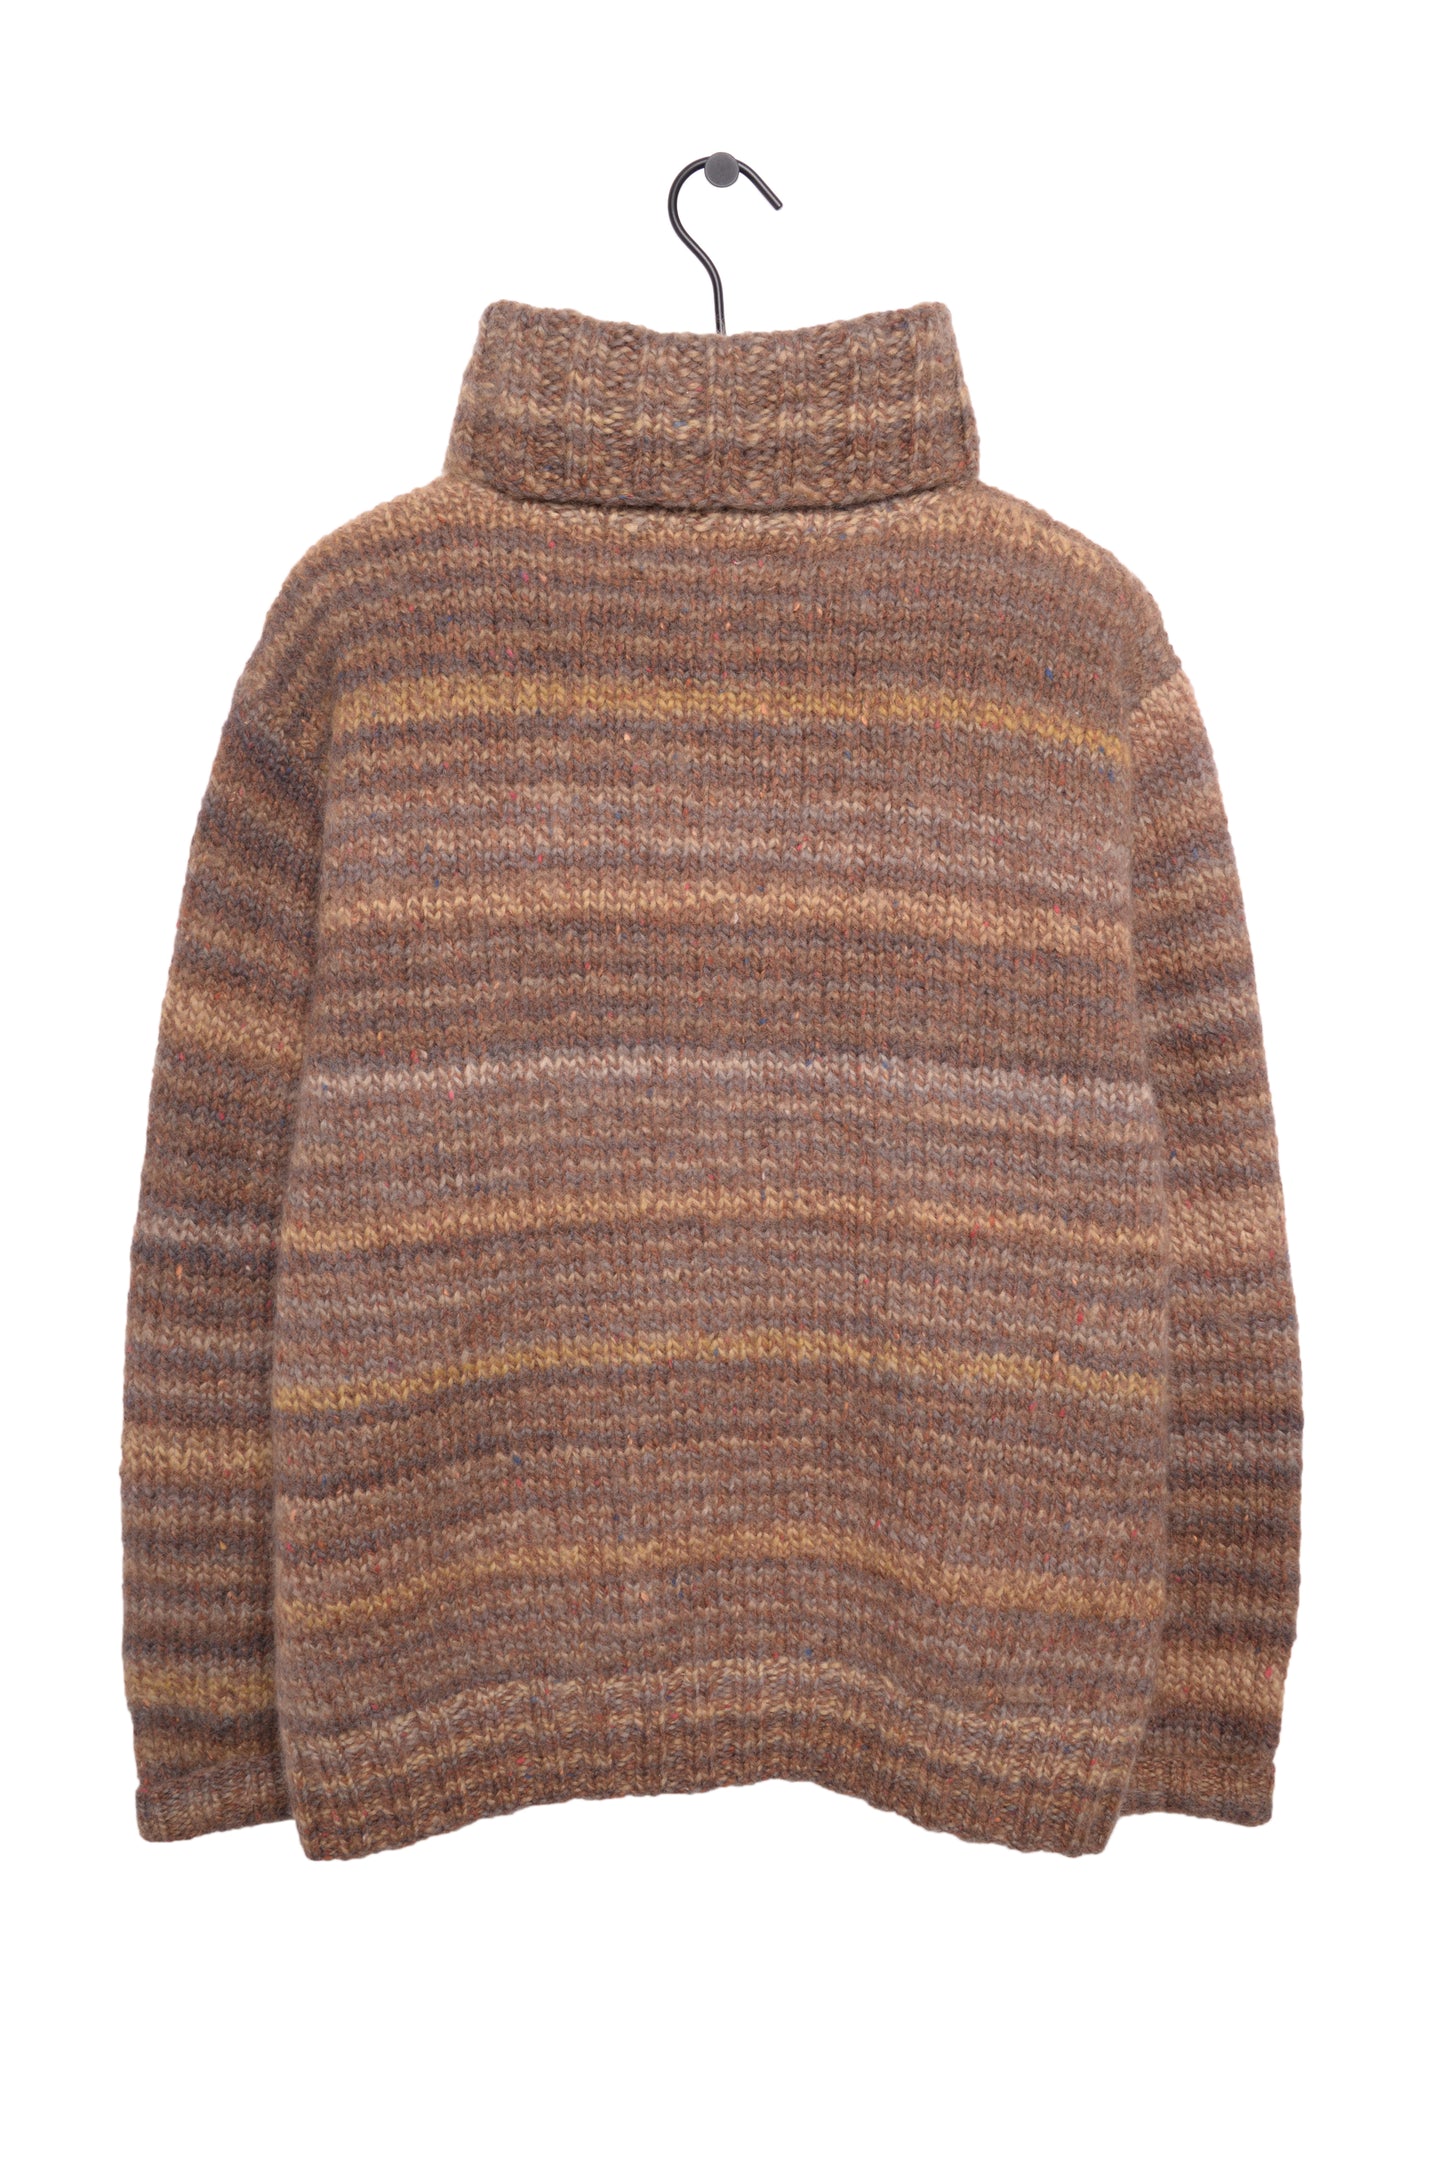 Brown Turtleneck Sweater